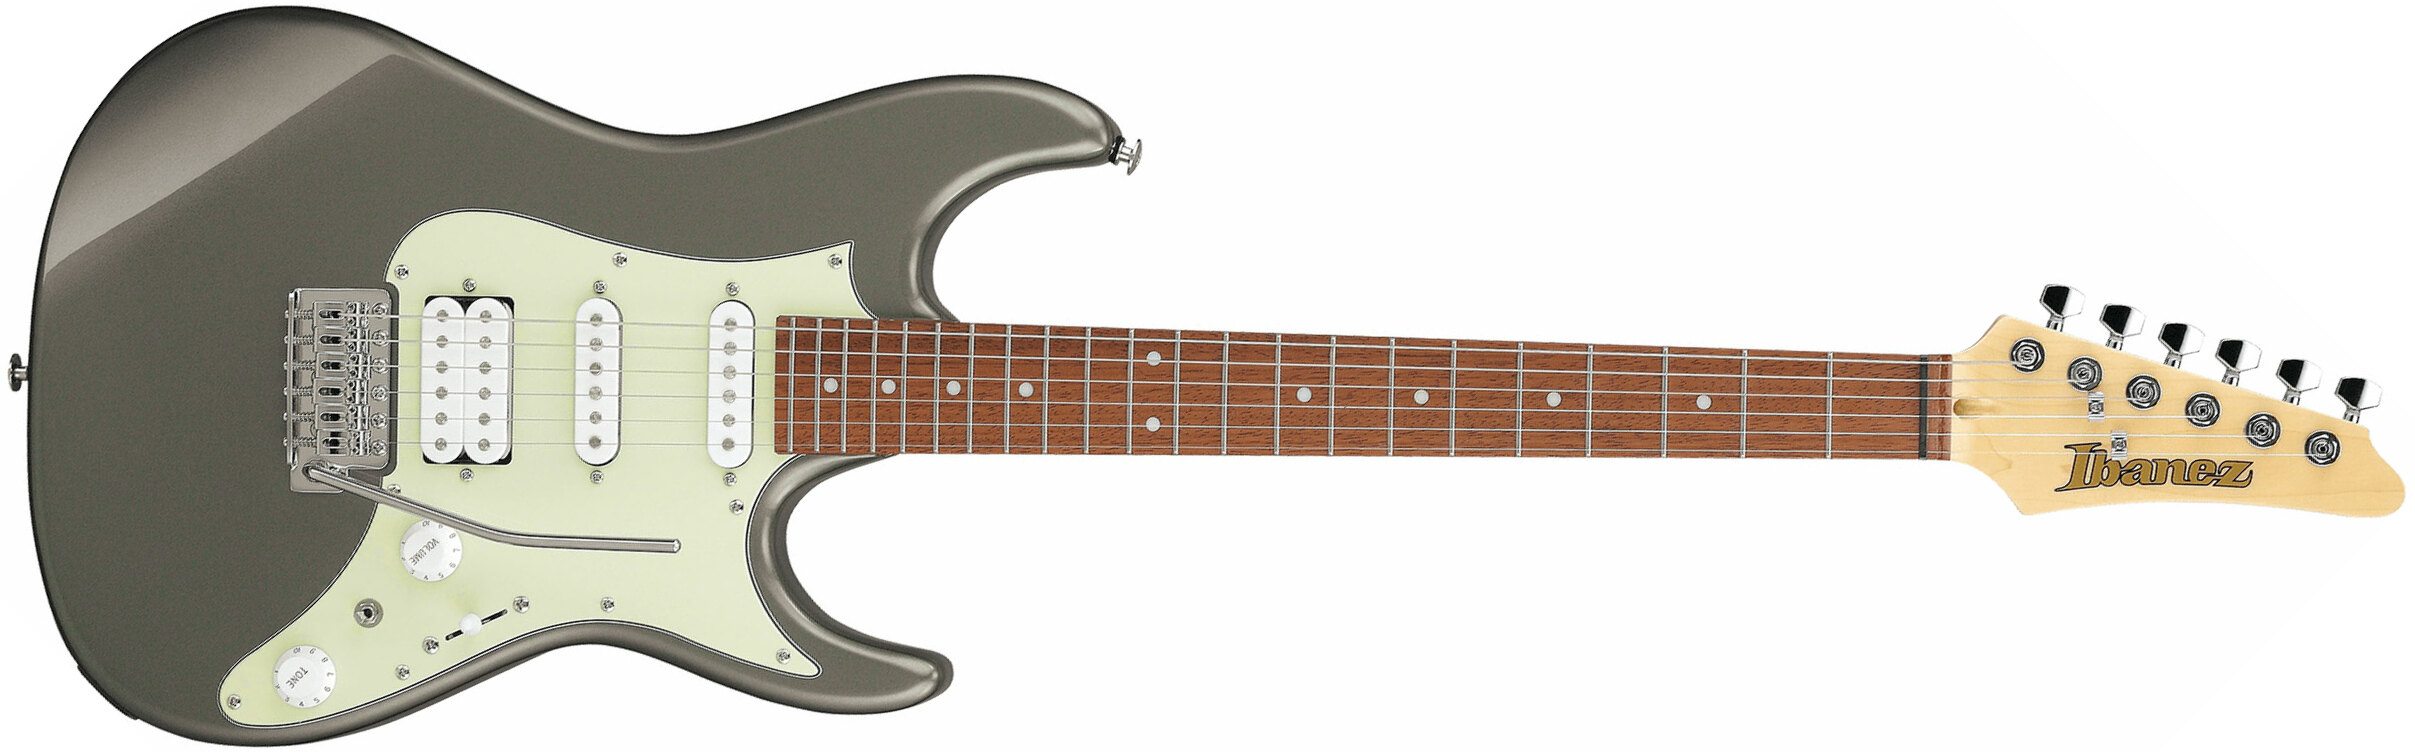 Ibanez Azes40 Tun Standard Hss Trem Jat - Tungsten - Str shape electric guitar - Main picture